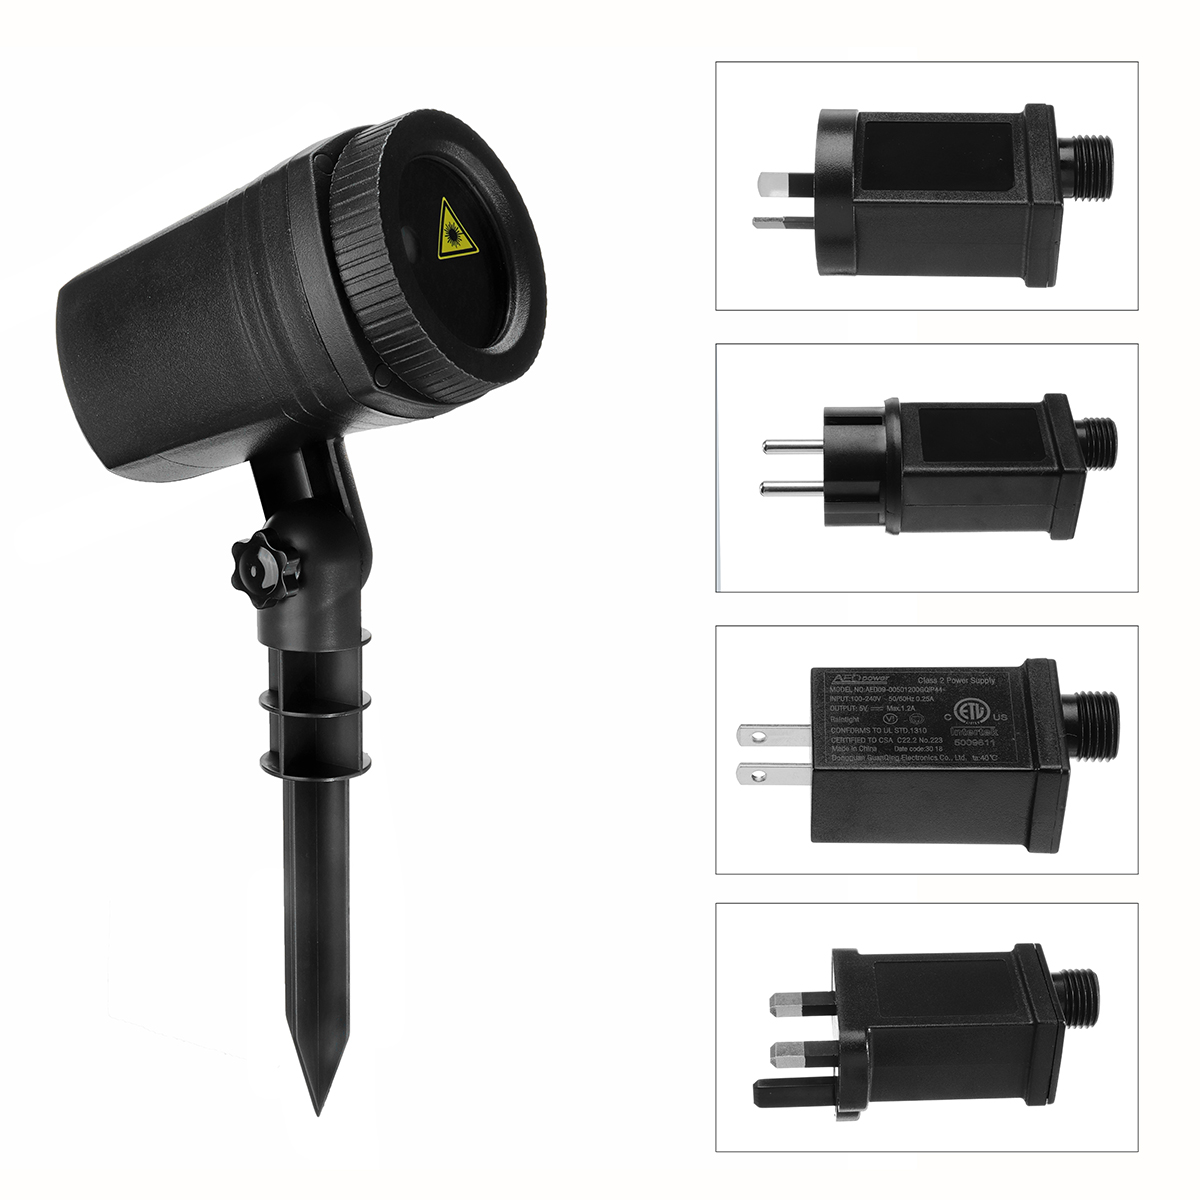 100-240V-Outdoor-Moving-Laser-Projector-LED-Light-Waterproof-Lawn-Garden-Lantern-Christma-Lamp-1406466